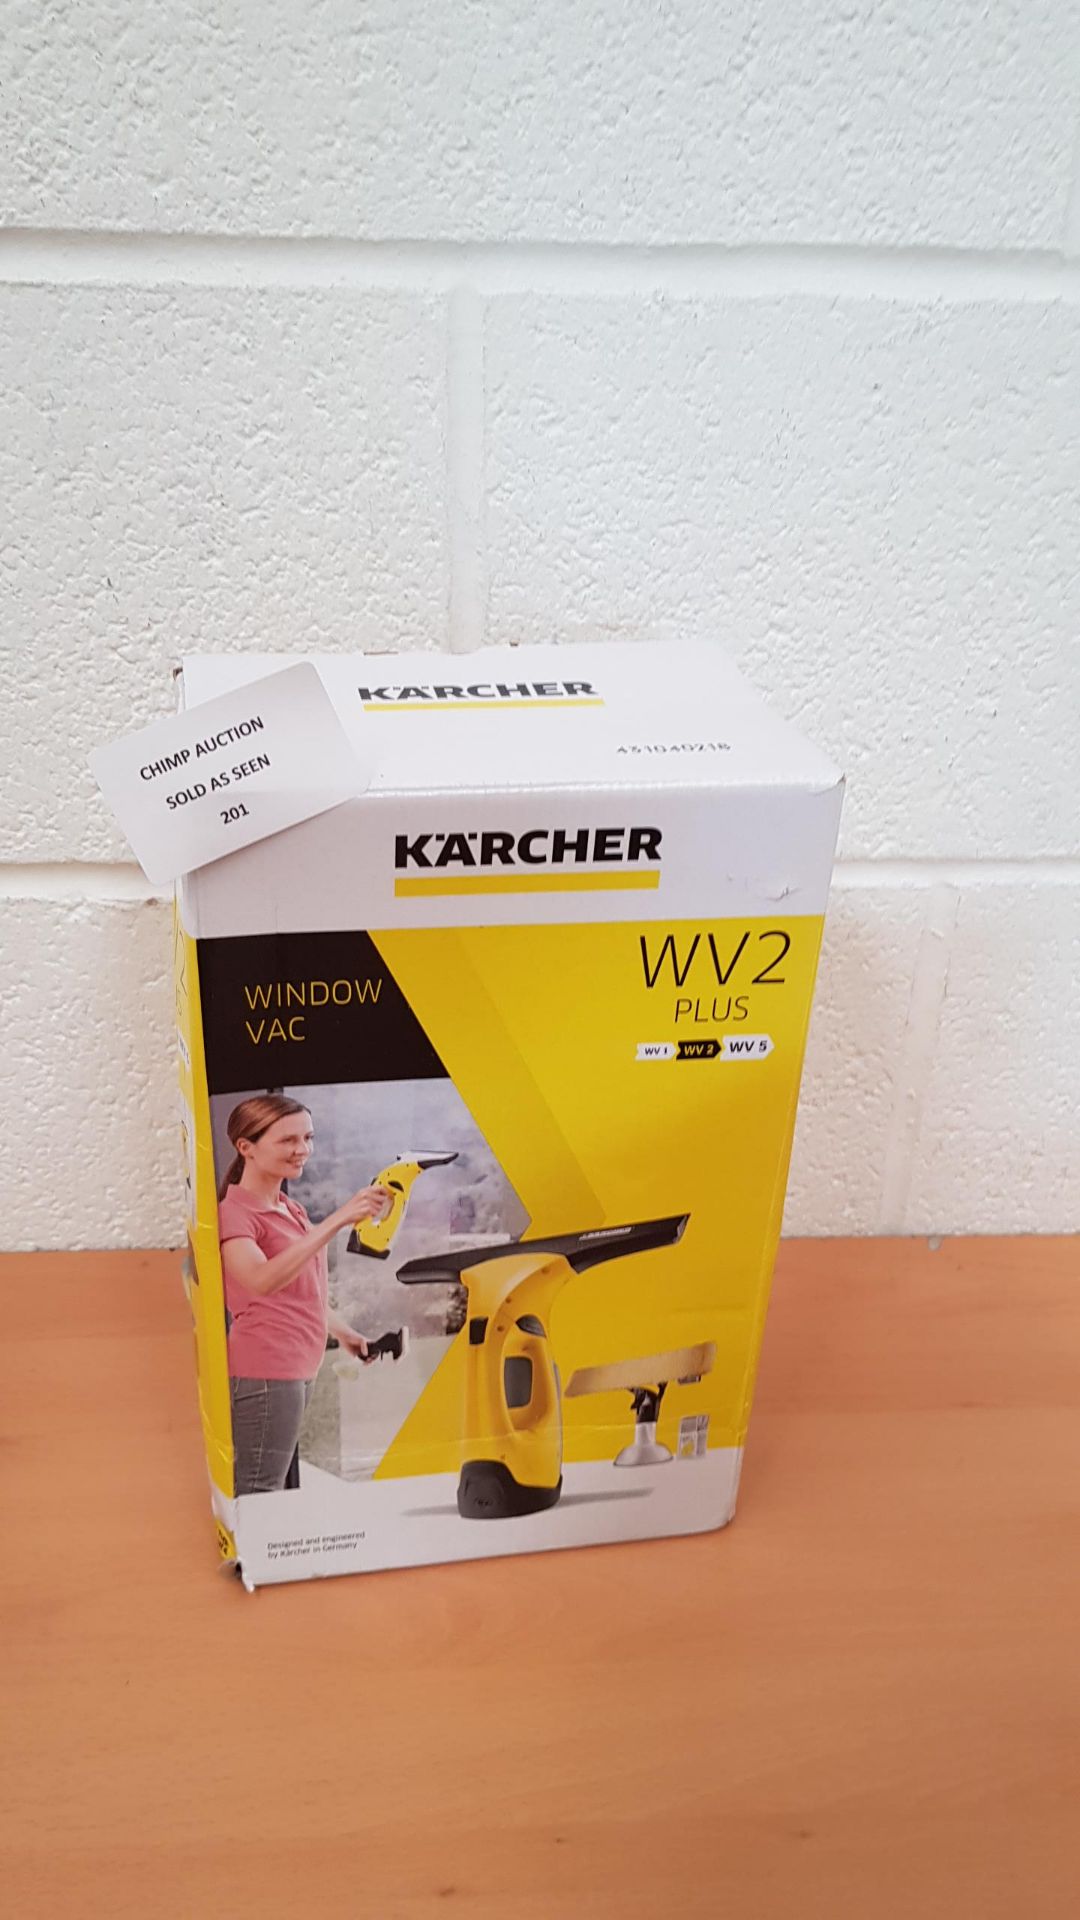 Kärcher Window Vac WV 2 Plus cleaner